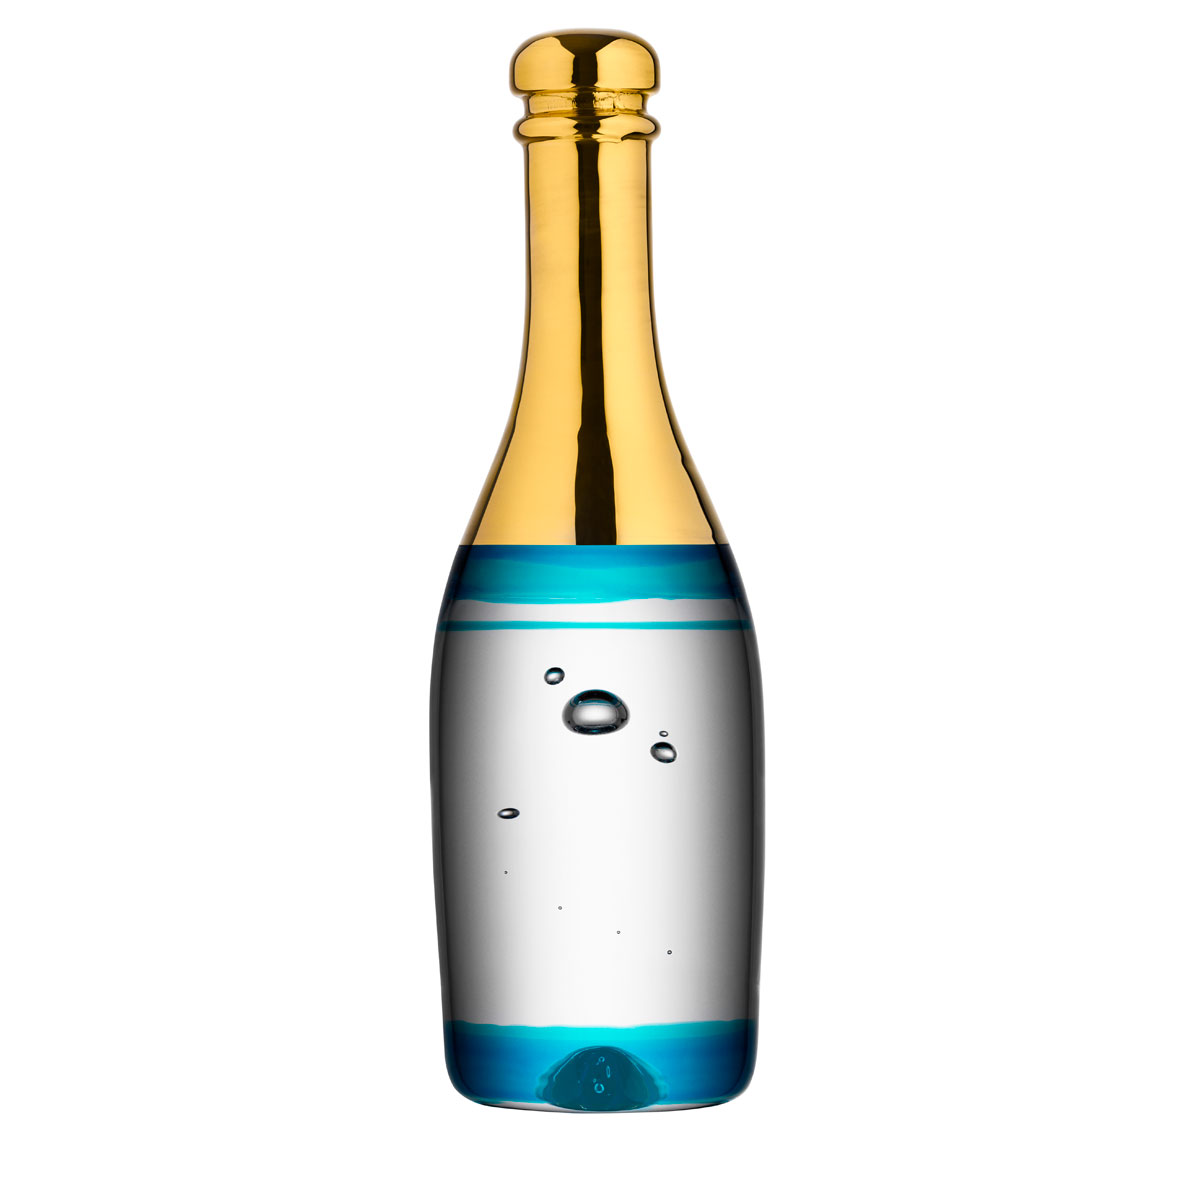 Kosta Boda Celebrate Crystal Champagne Bottle, Blue